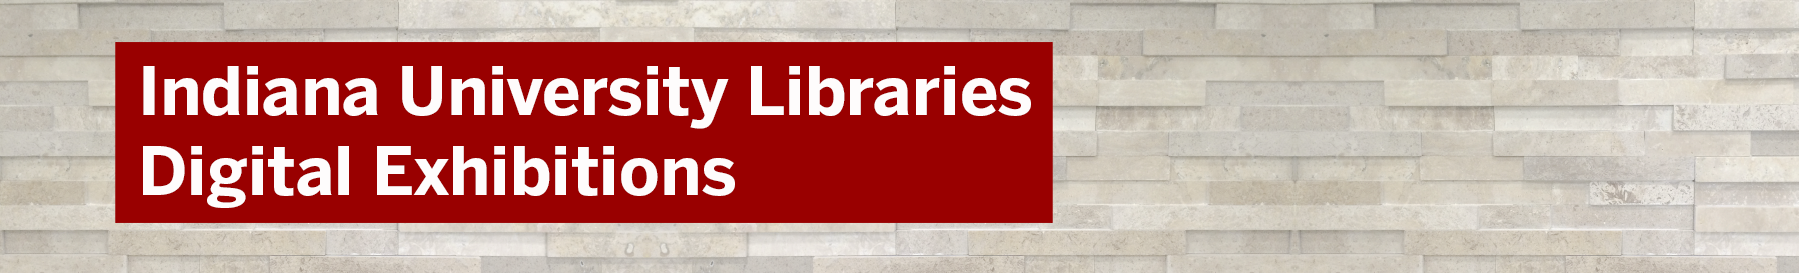 Indiana University Libraries Digital Exhibitions